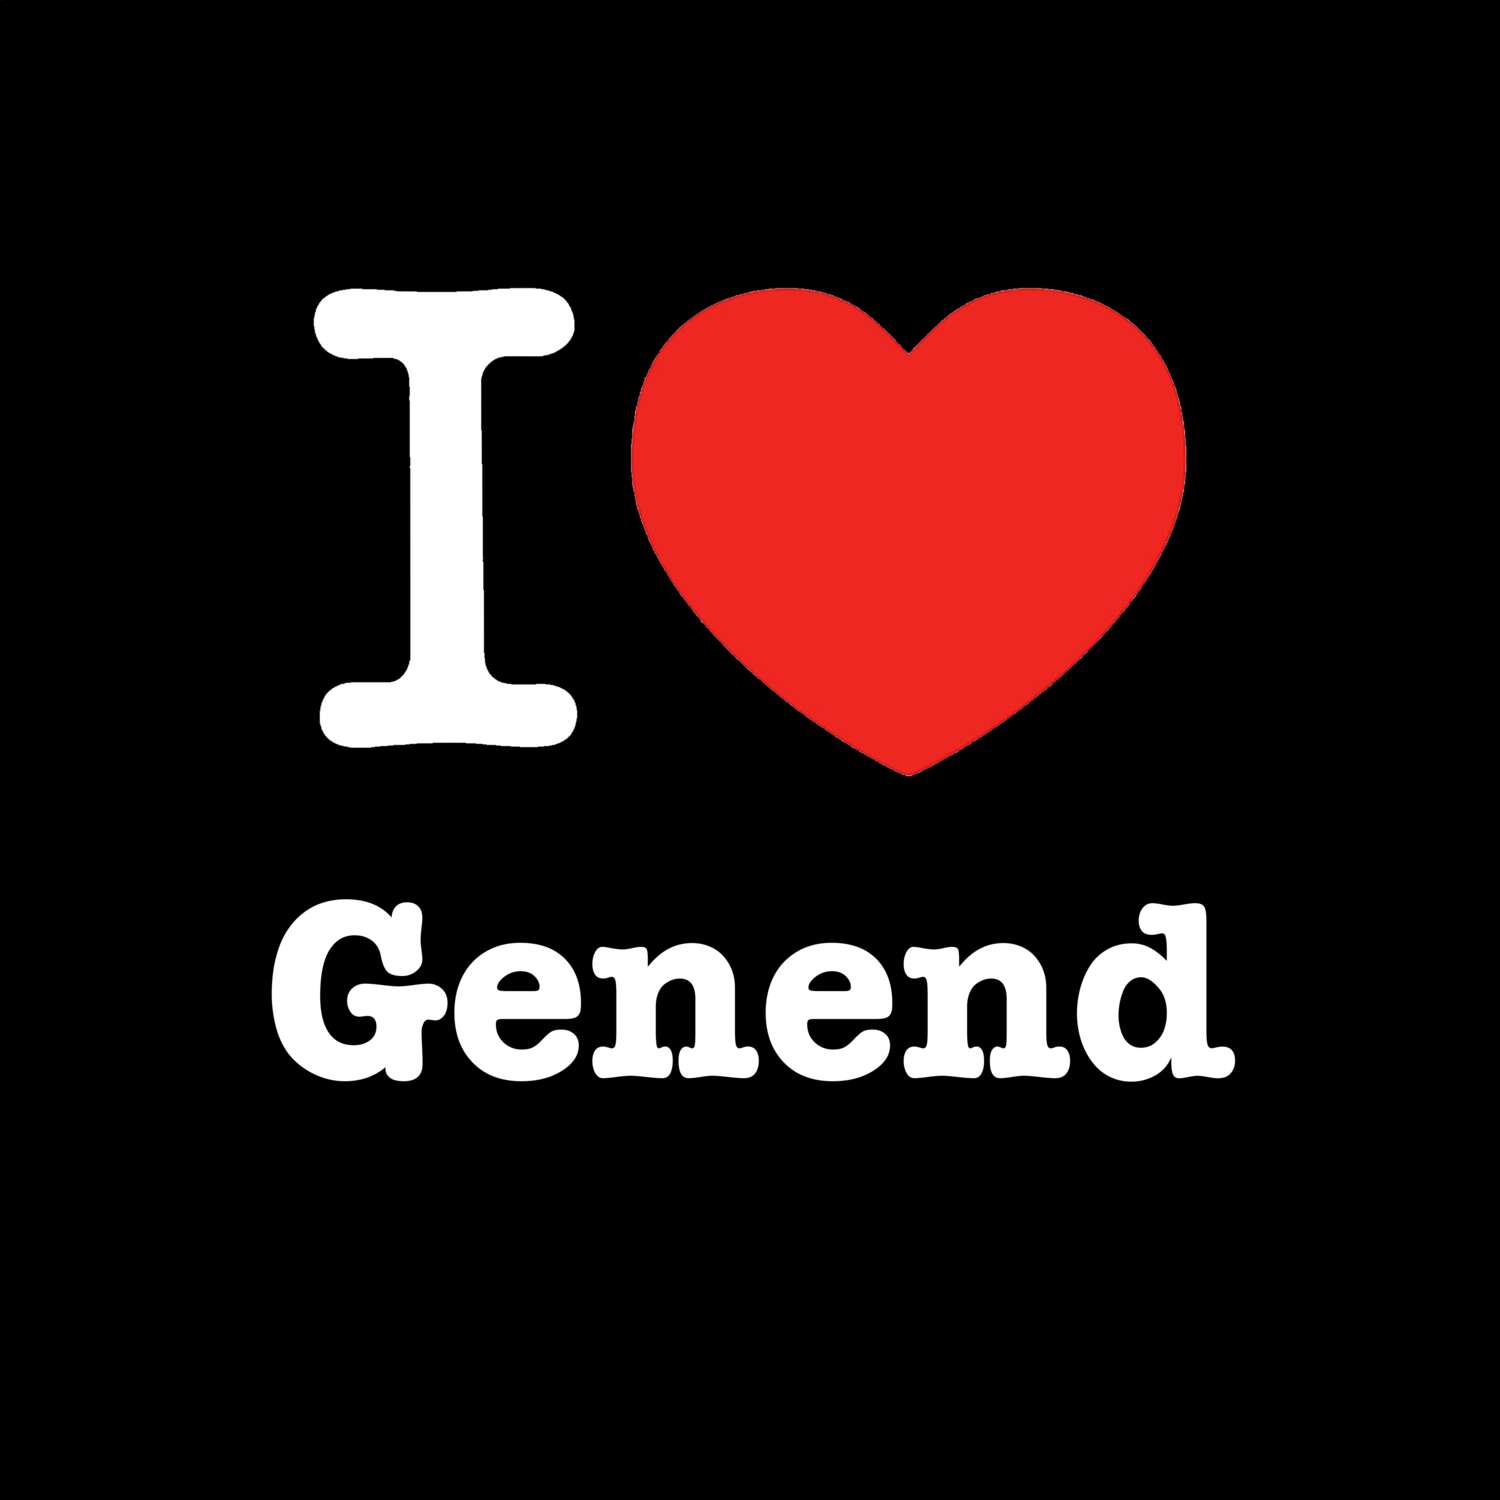 Genend T-Shirt »I love«